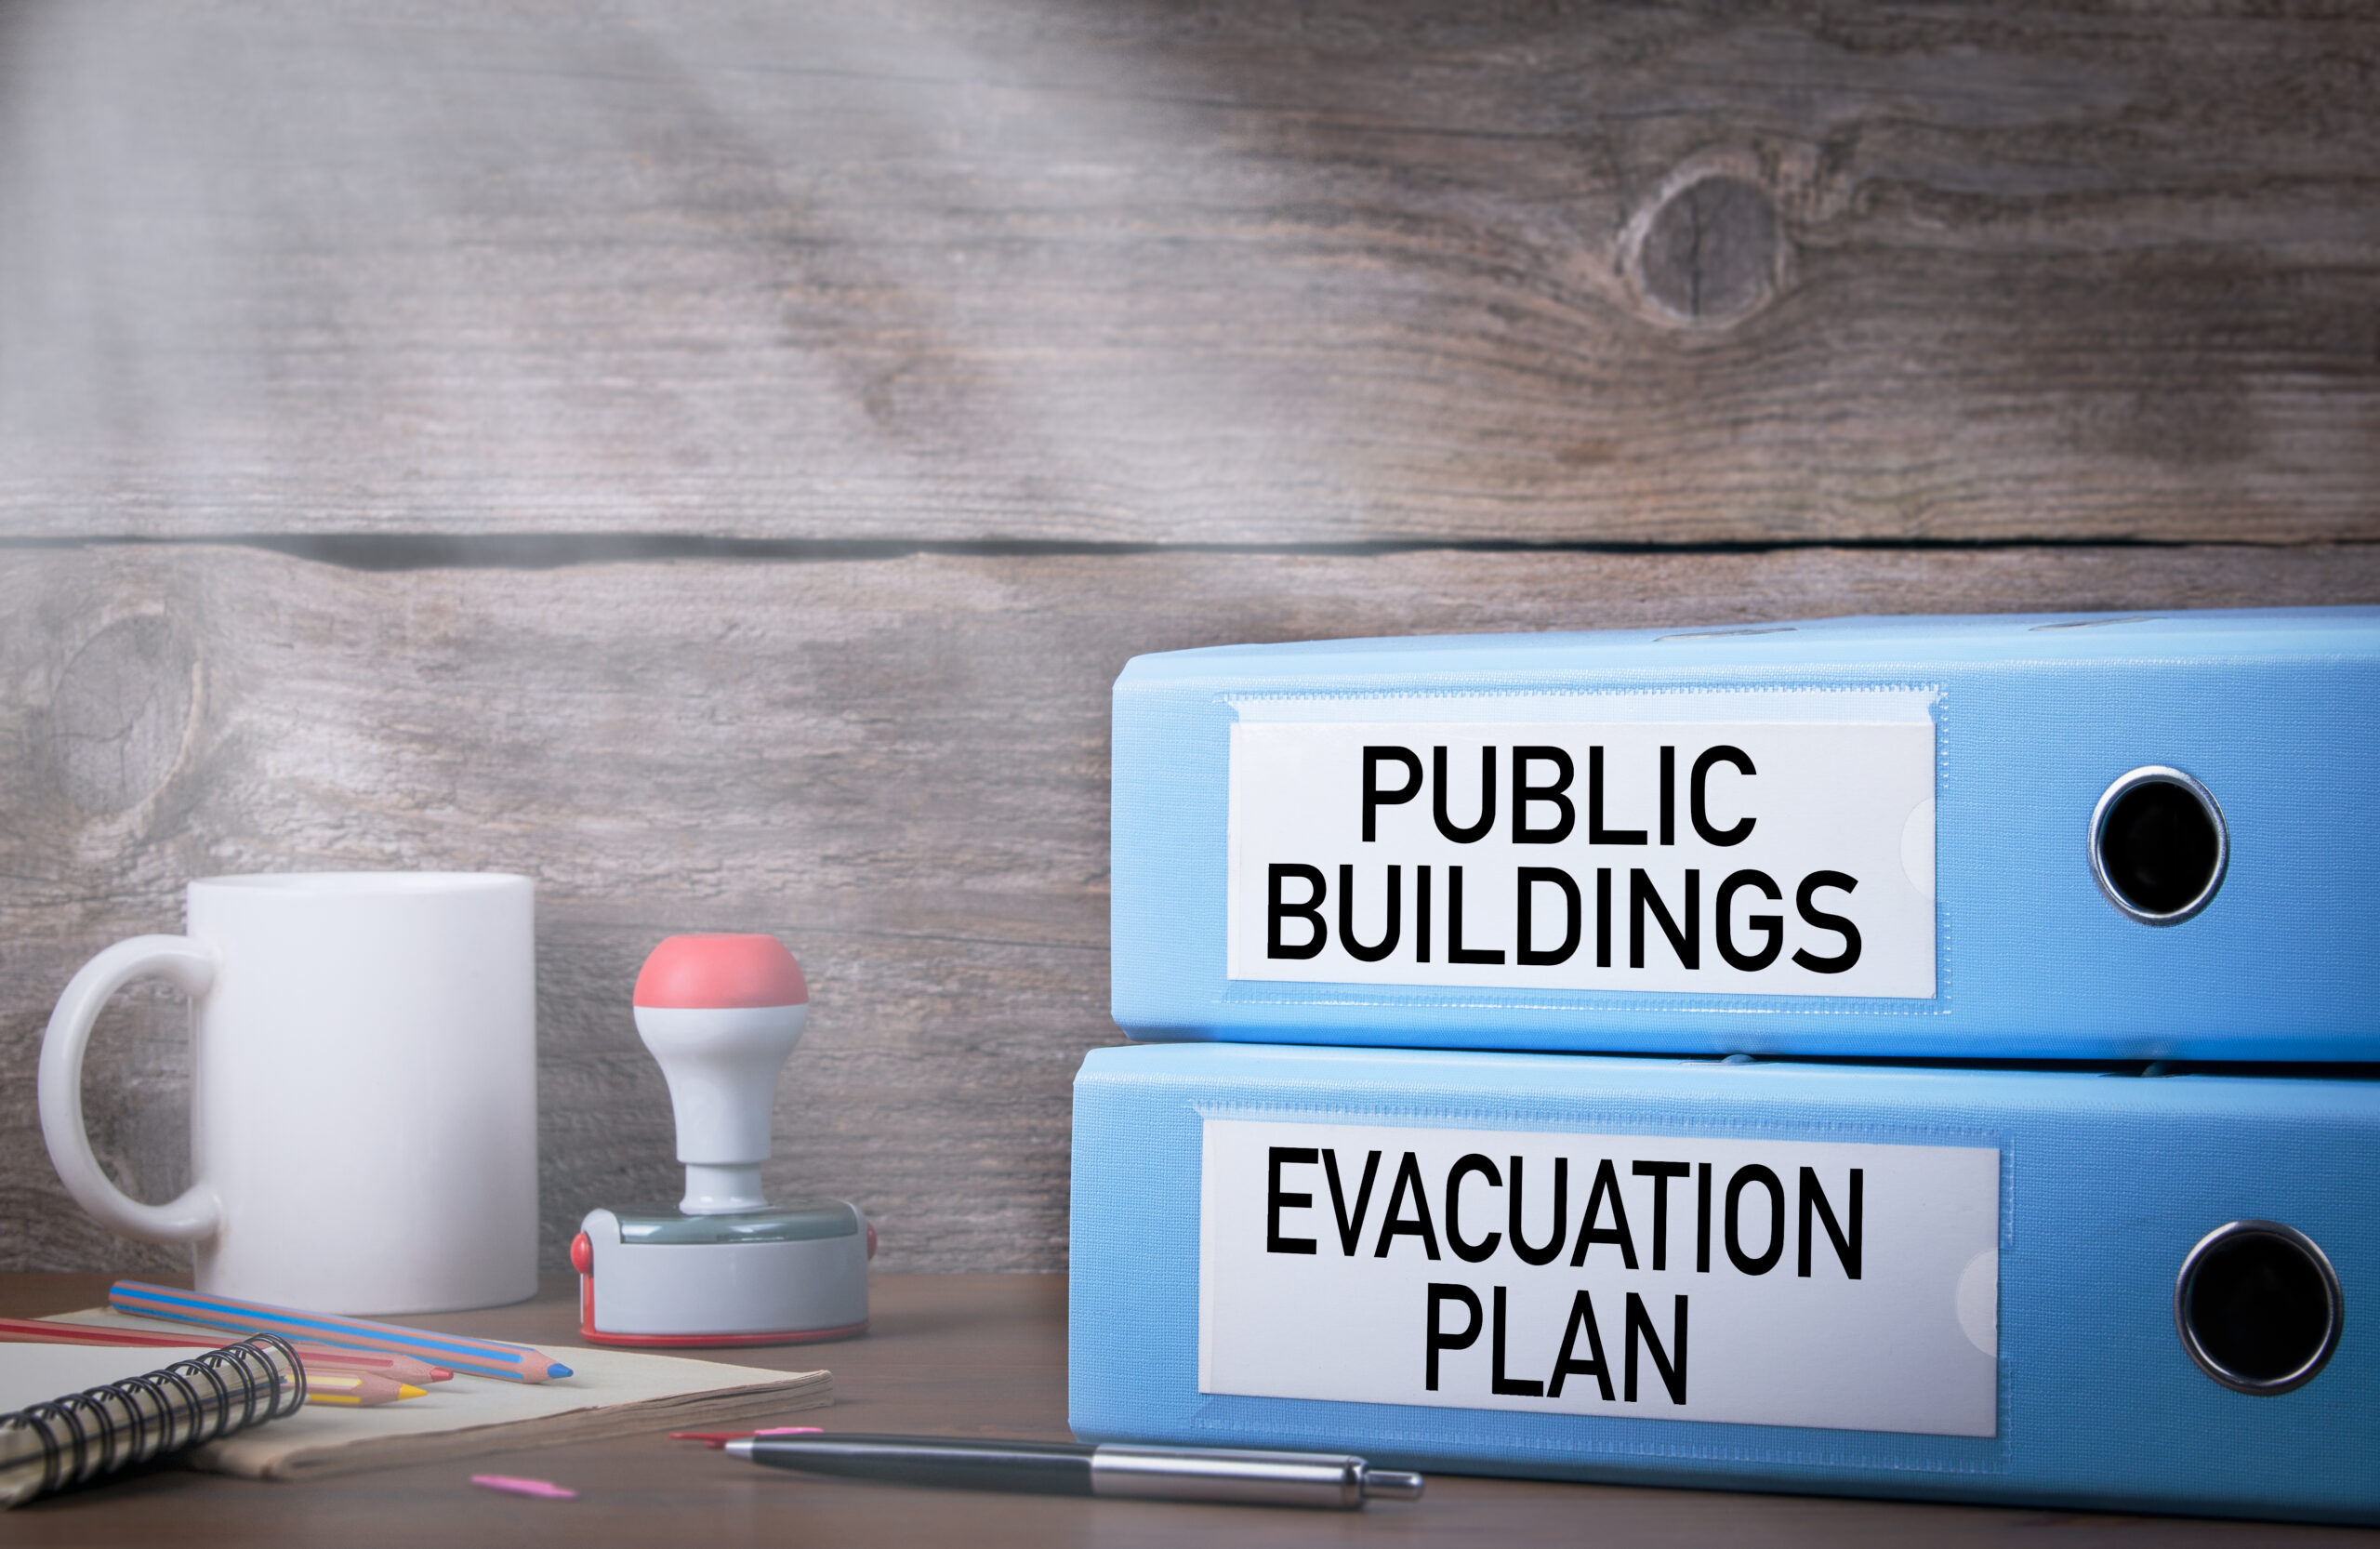 Emergency evacuation plan procedure folder for public buildings.